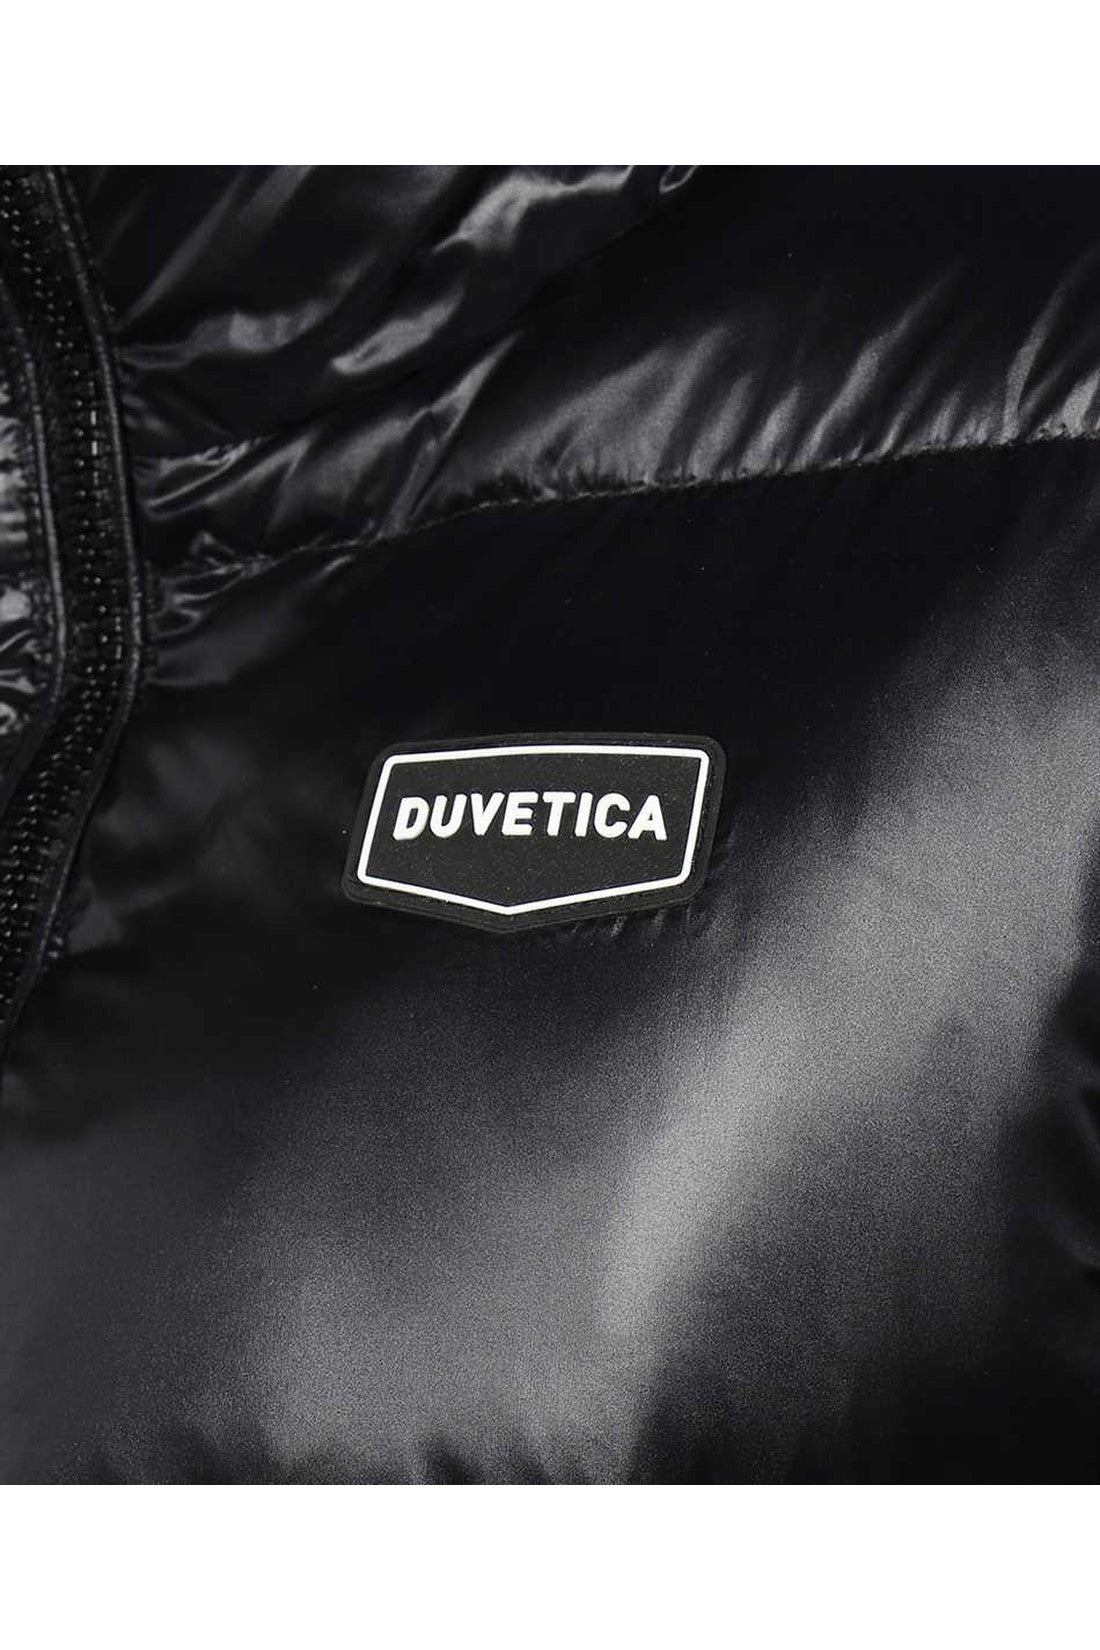 Duvetica-OUTLET-SALE-Long-down-jacket-Jacken-Mantel-ARCHIVE-COLLECTION-3.jpg